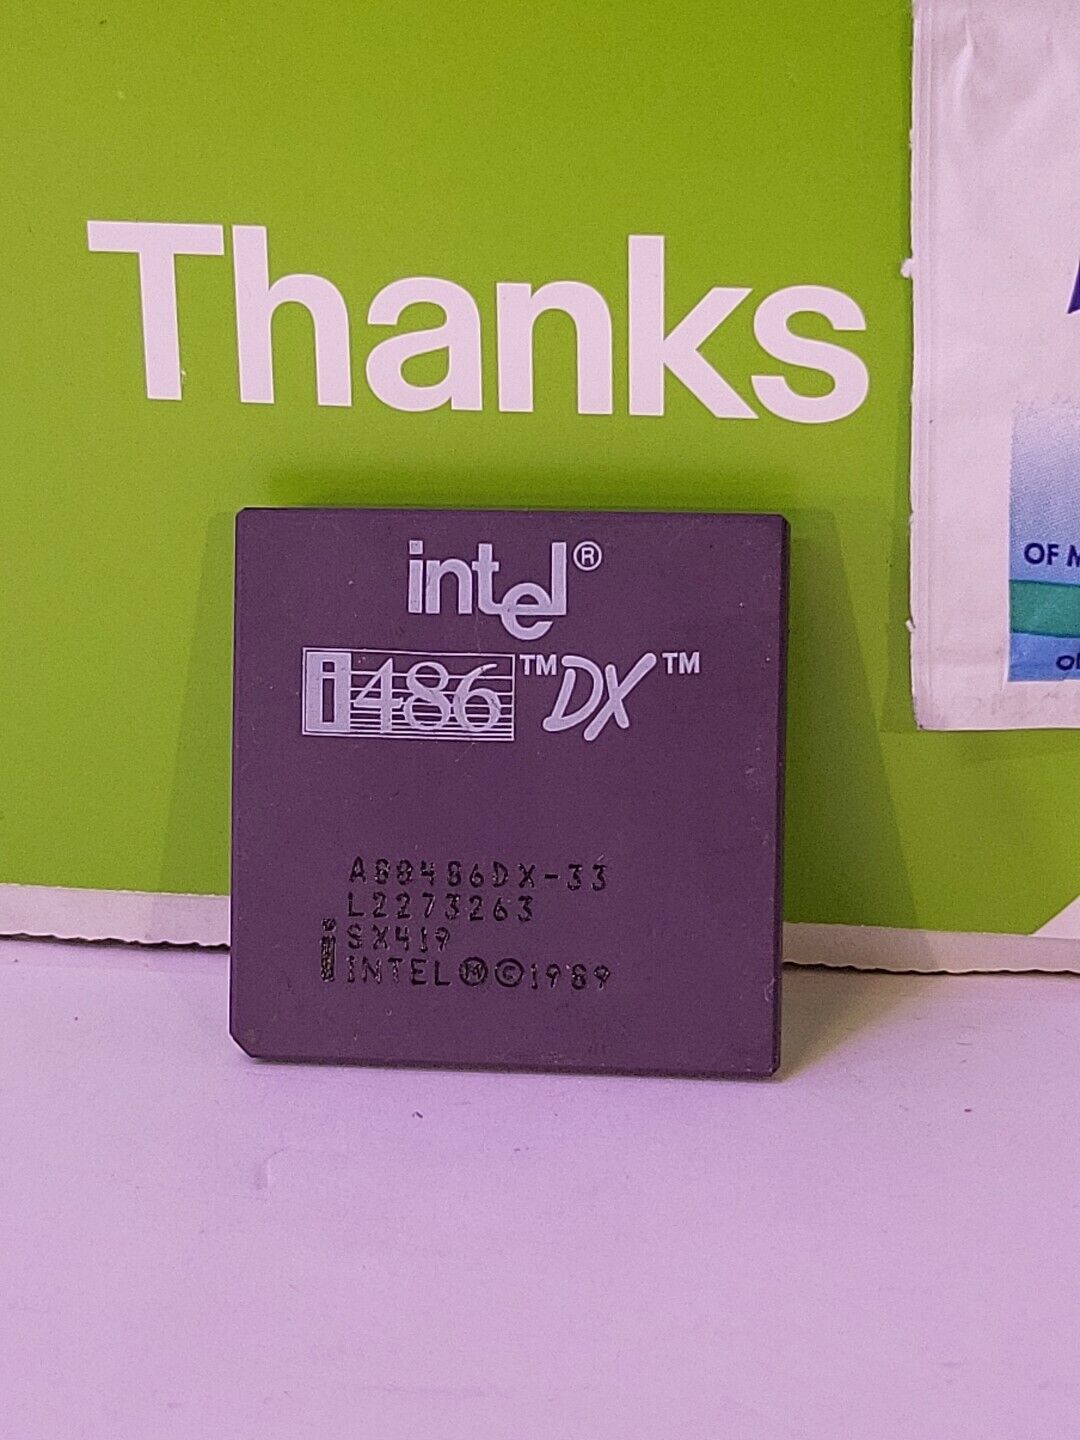 Intel i486 DX A80486DX-33 33MHz CPU Processor